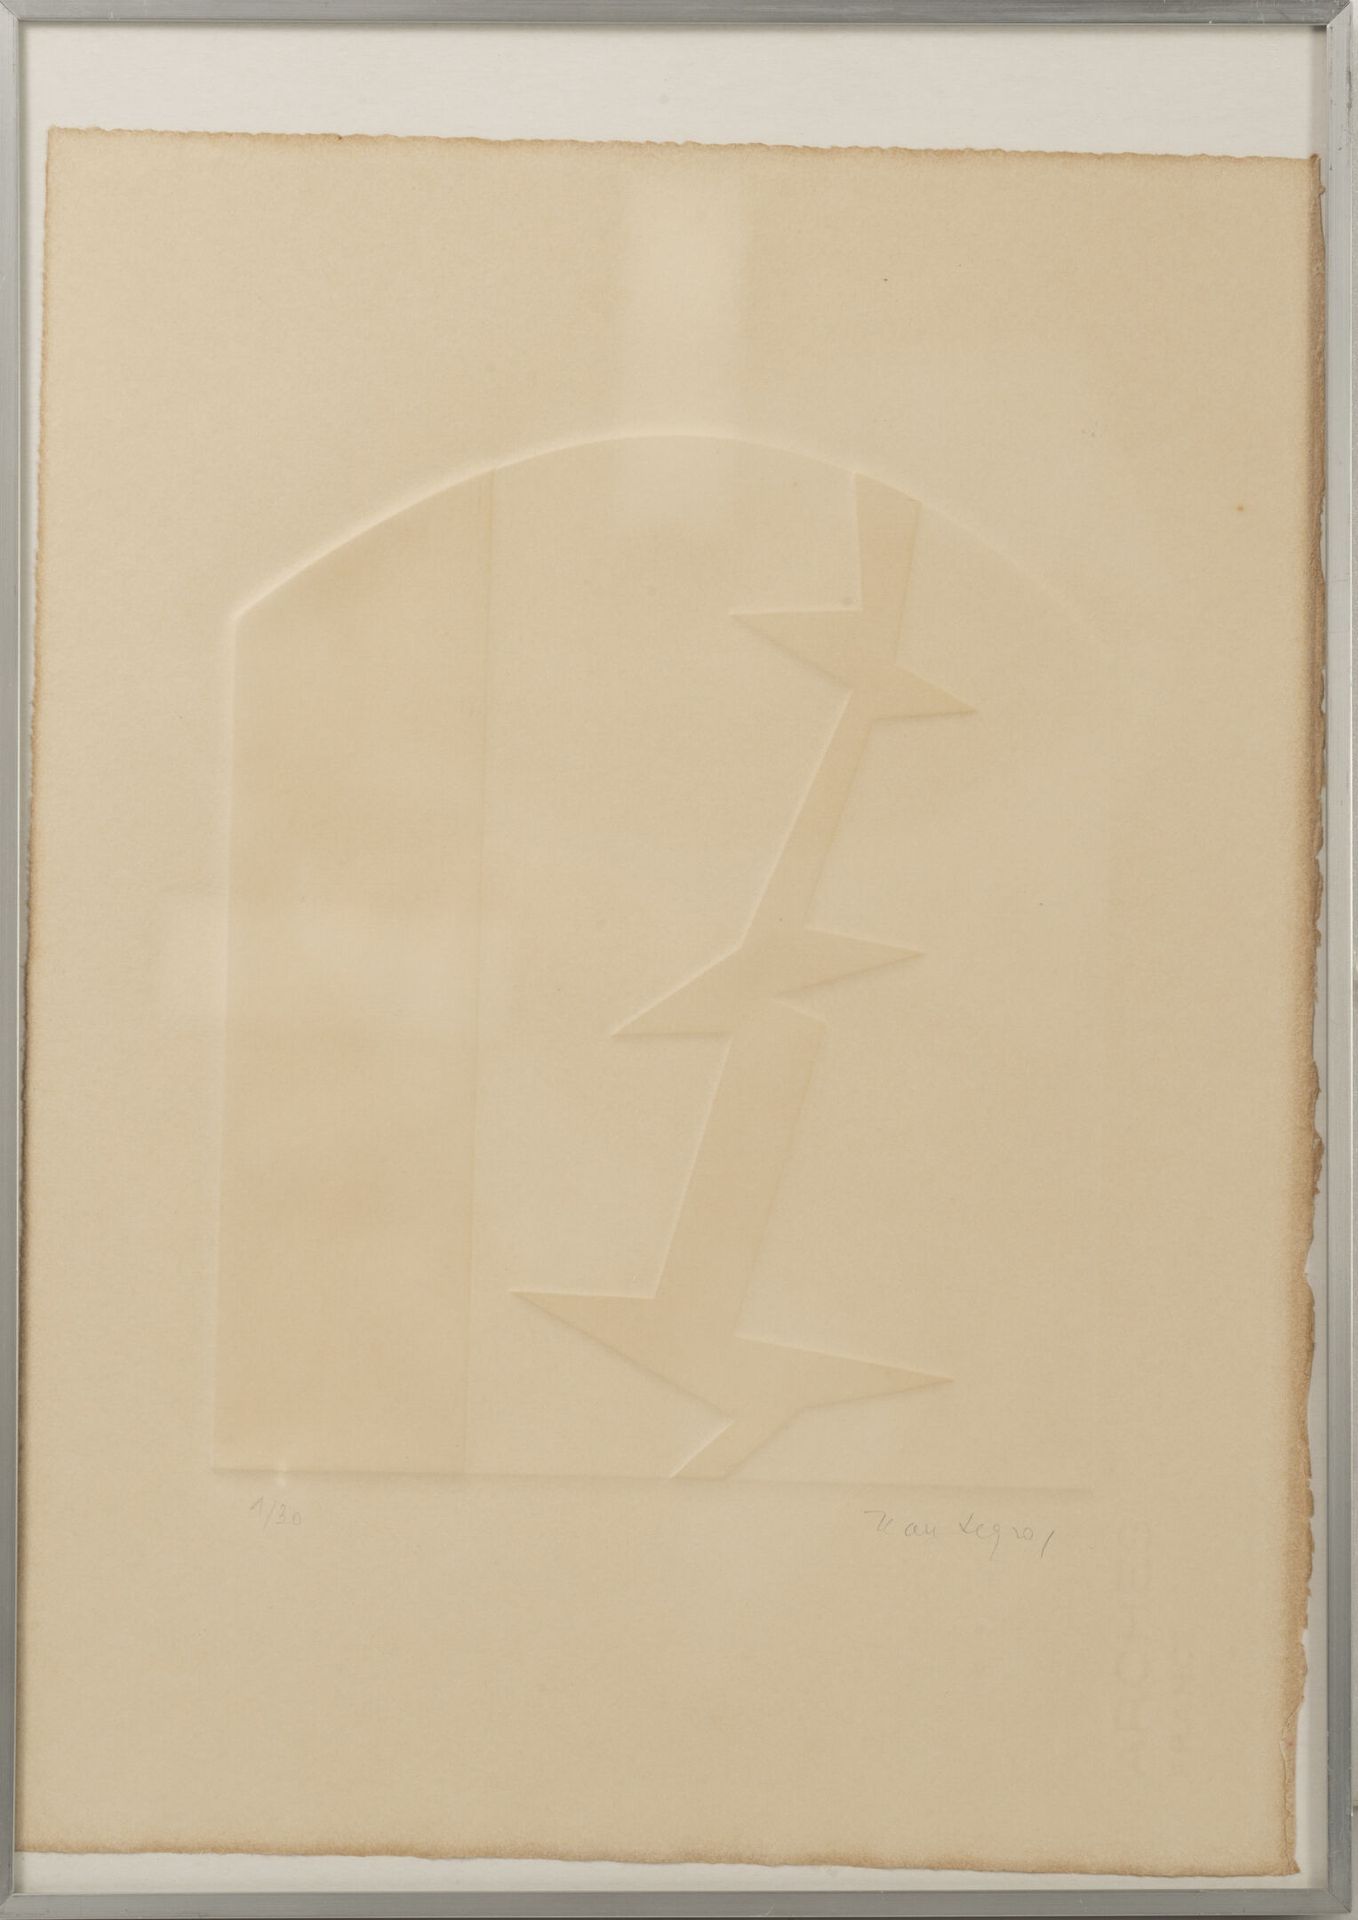 Jean LEGROS (1917-1981) 无题，浮雕。
打印在纸上。
右下方有签名，左下方有编号1/30。
38 x 28,5厘米。
显著的狐臭和污点。